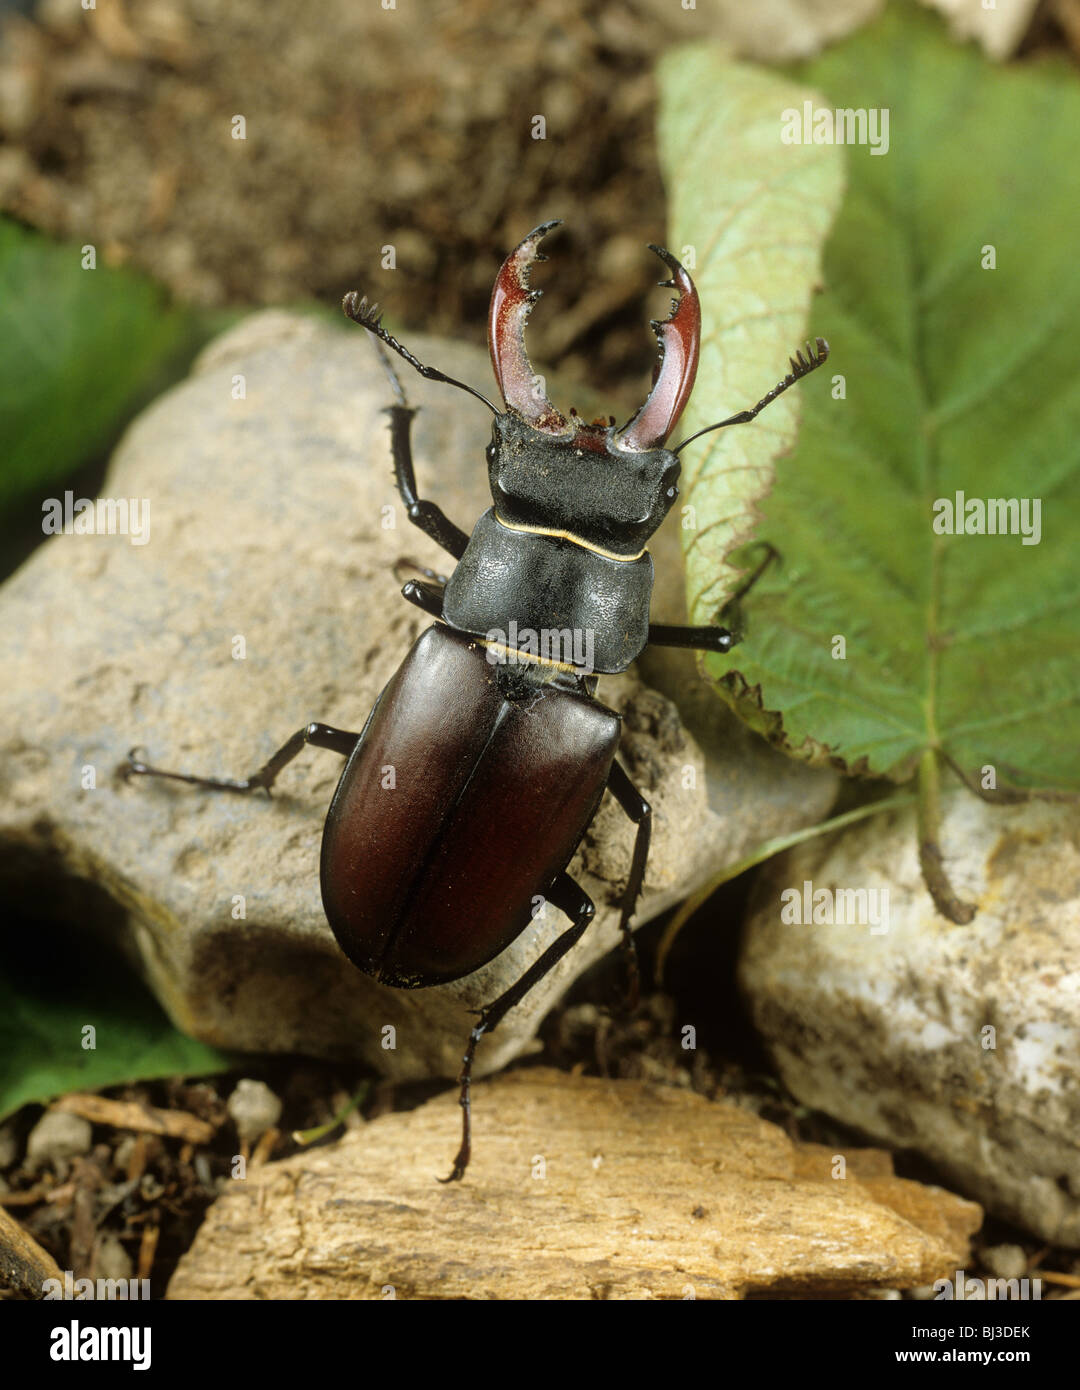 Male stag beetle (Lucanus cervus) on leaf litter with large mandibles Stock Photo